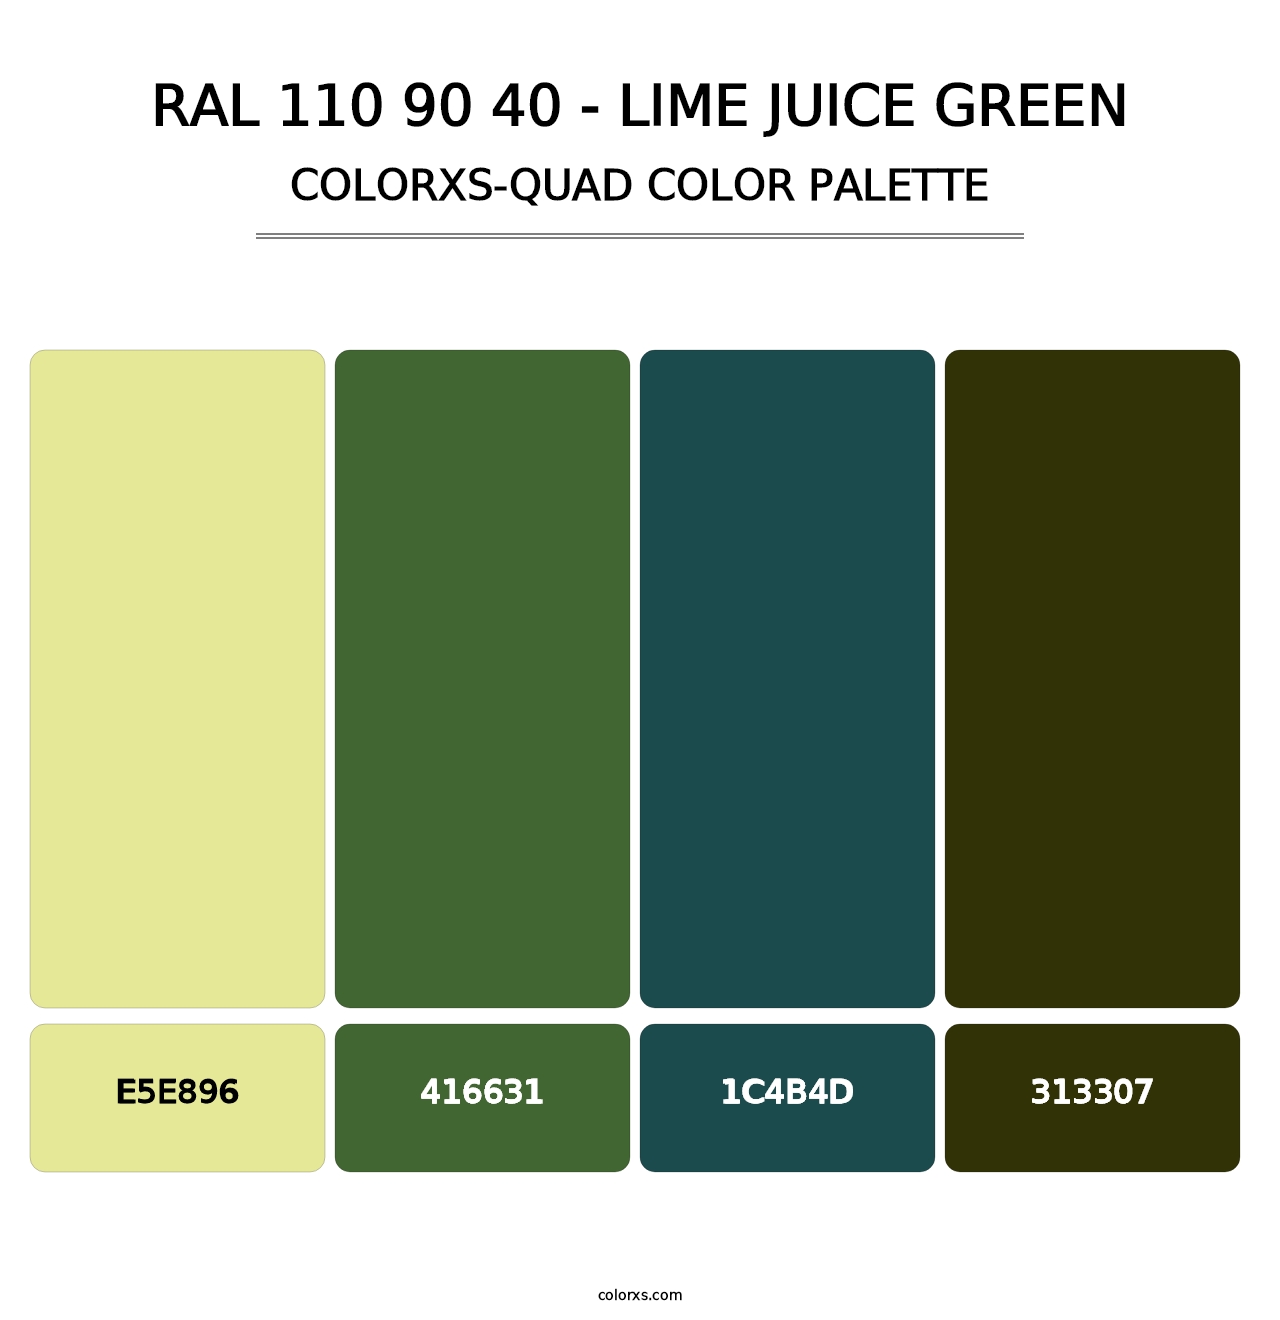 RAL 110 90 40 - Lime Juice Green - Colorxs Quad Palette